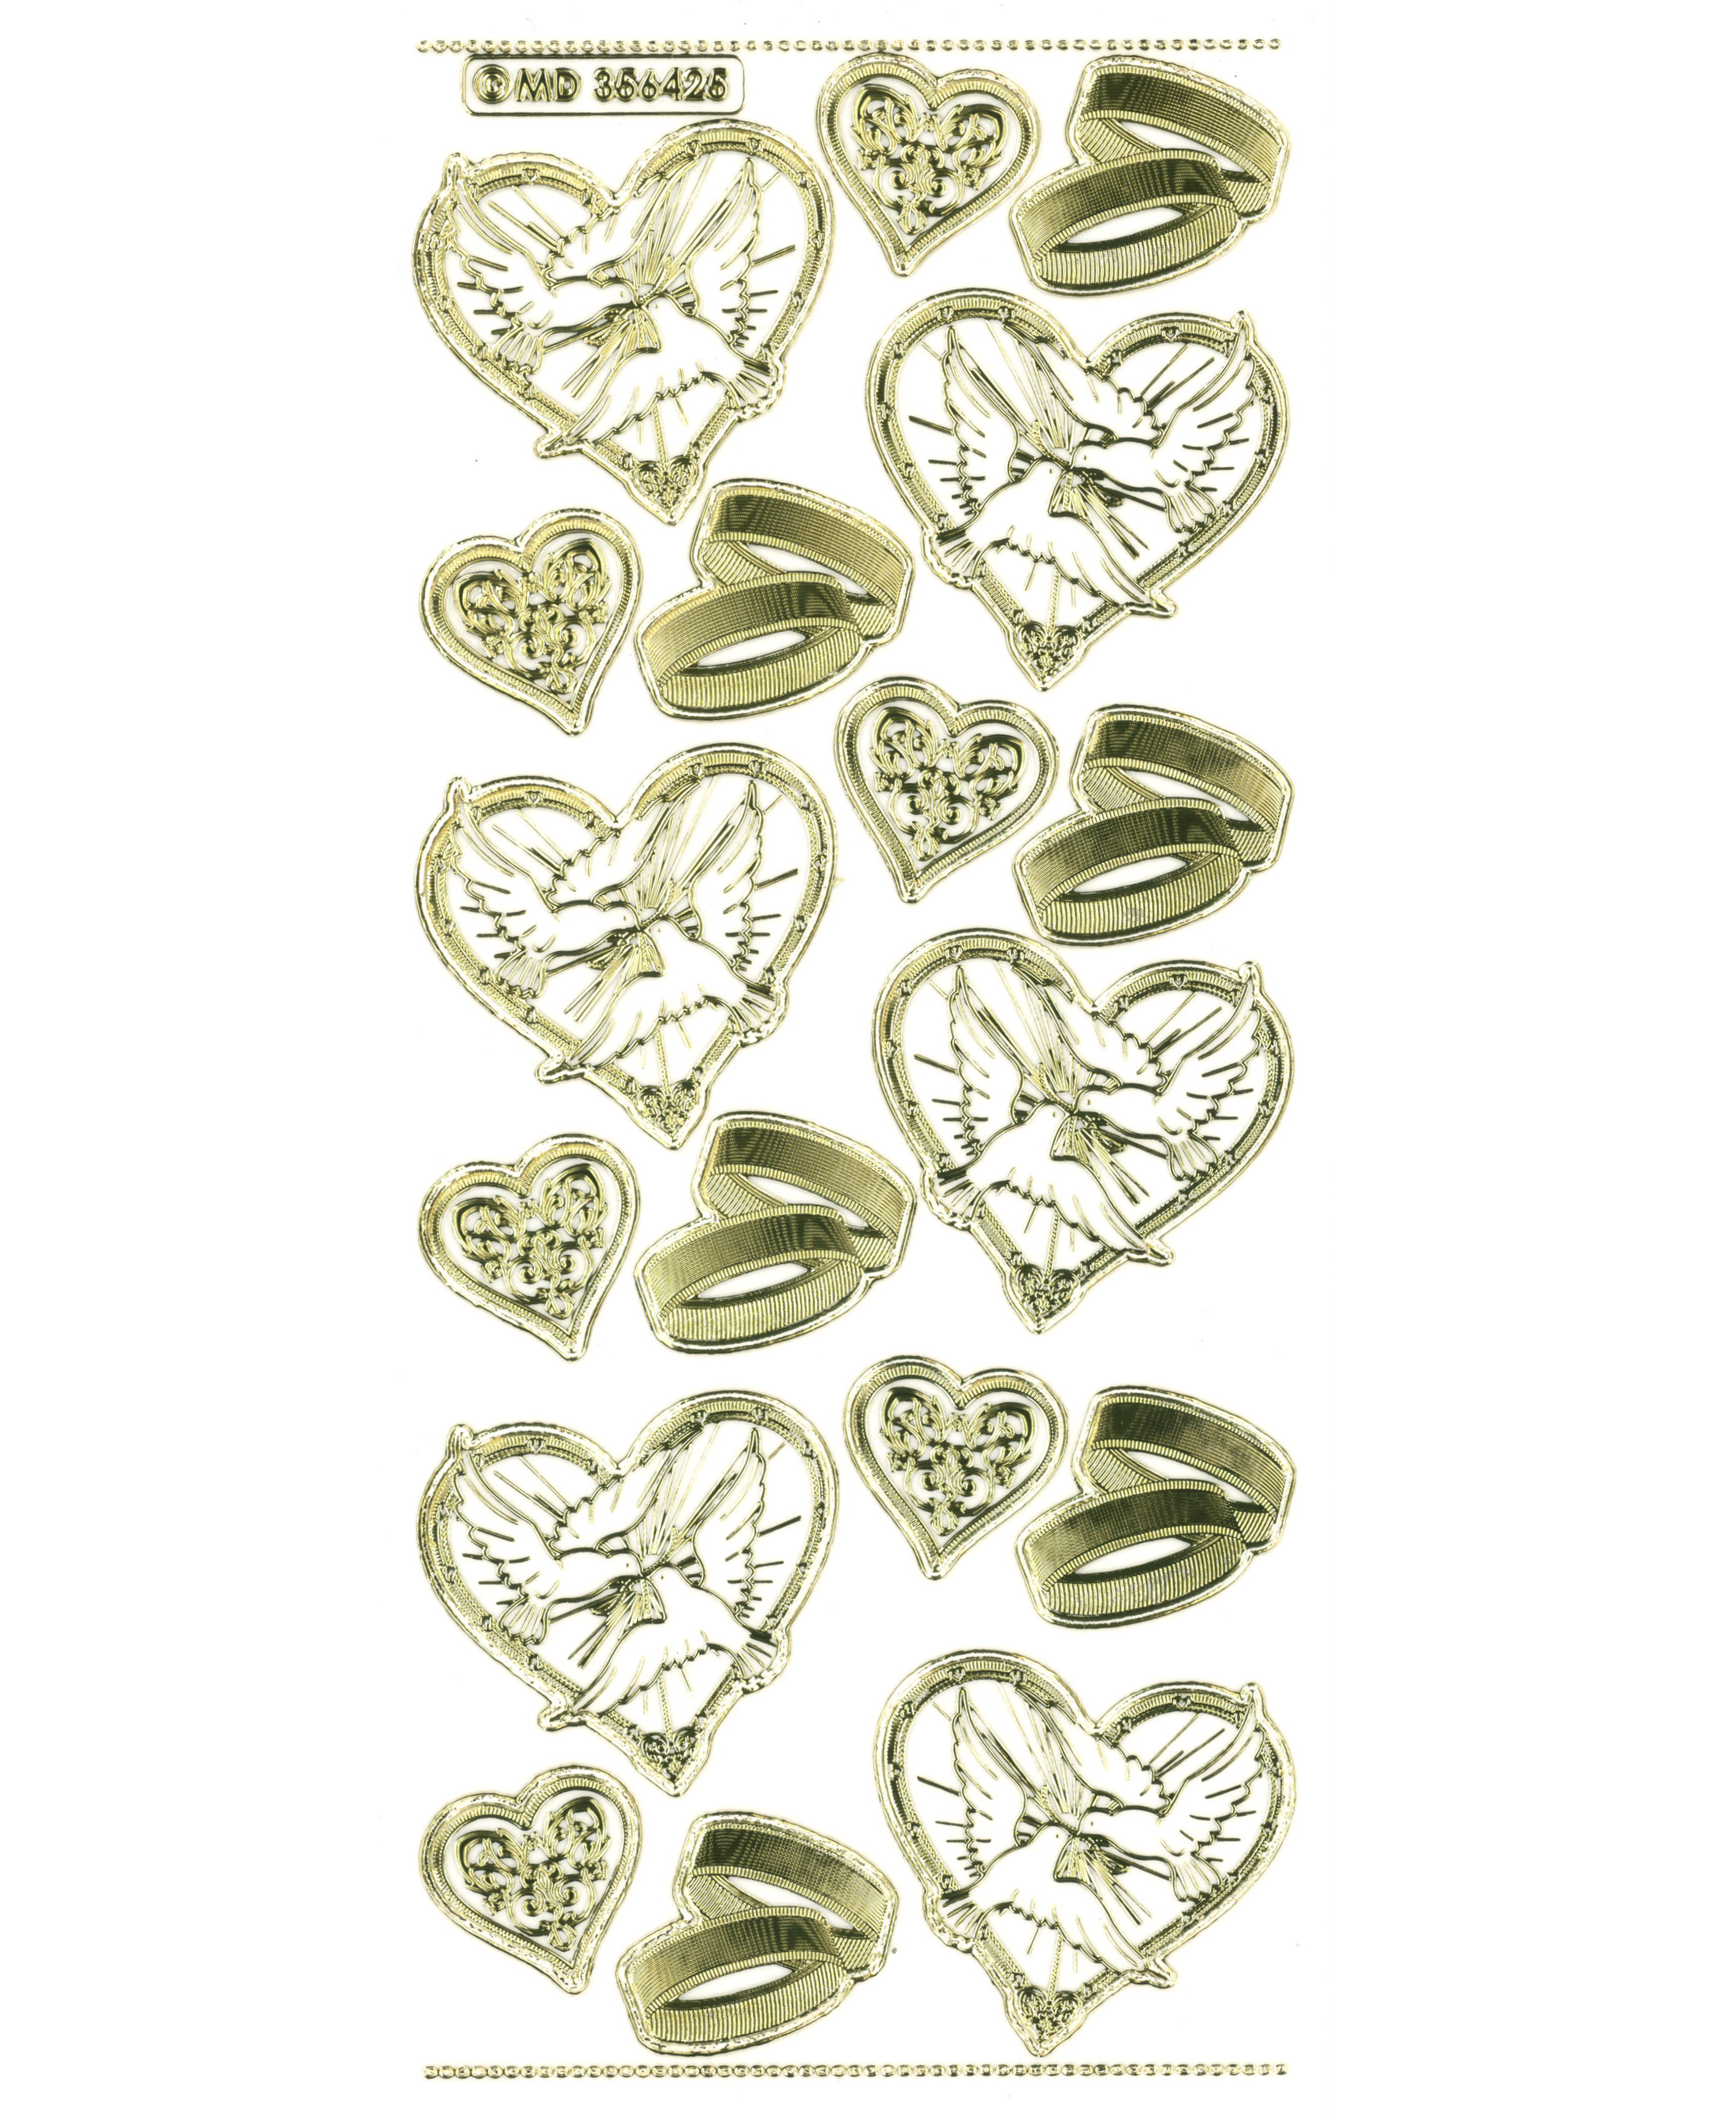 Shiny Outline Stickers Tauben Eheringe Marriage Doves with Rings gold transparent Konturensticker Schrift 10x23cm Bogen